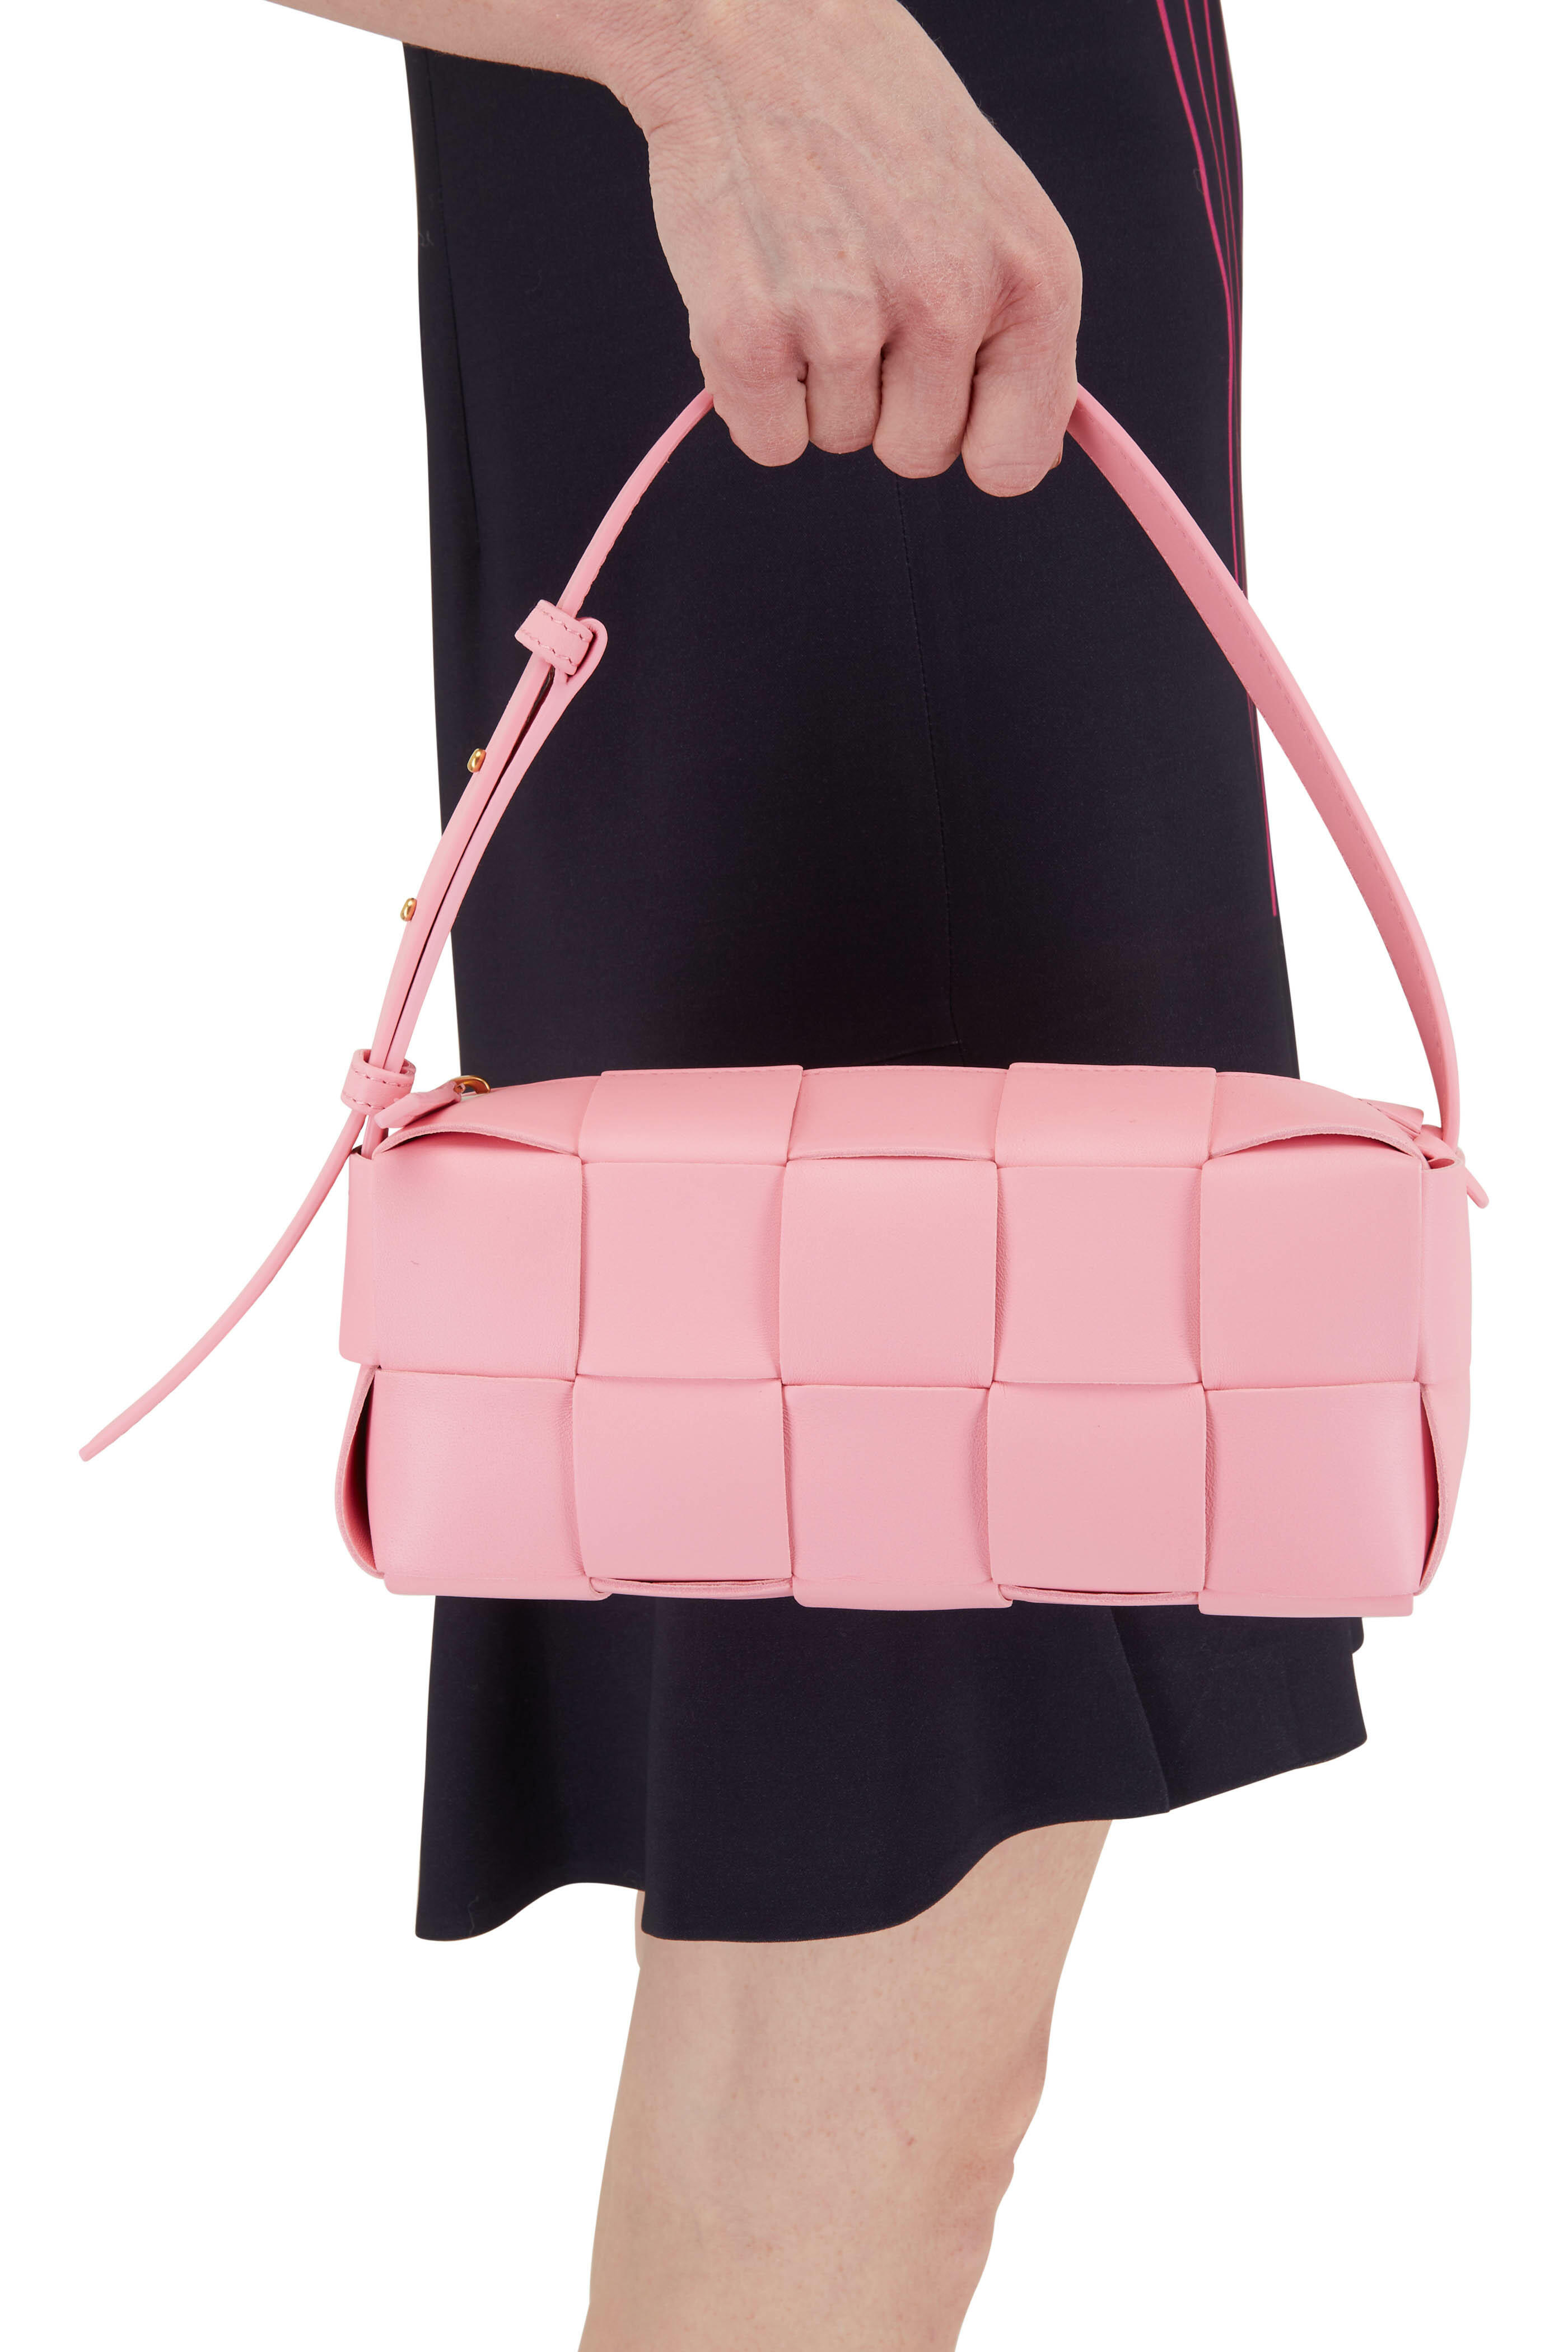 These Bottega Veneta handbag lookalikes are really good